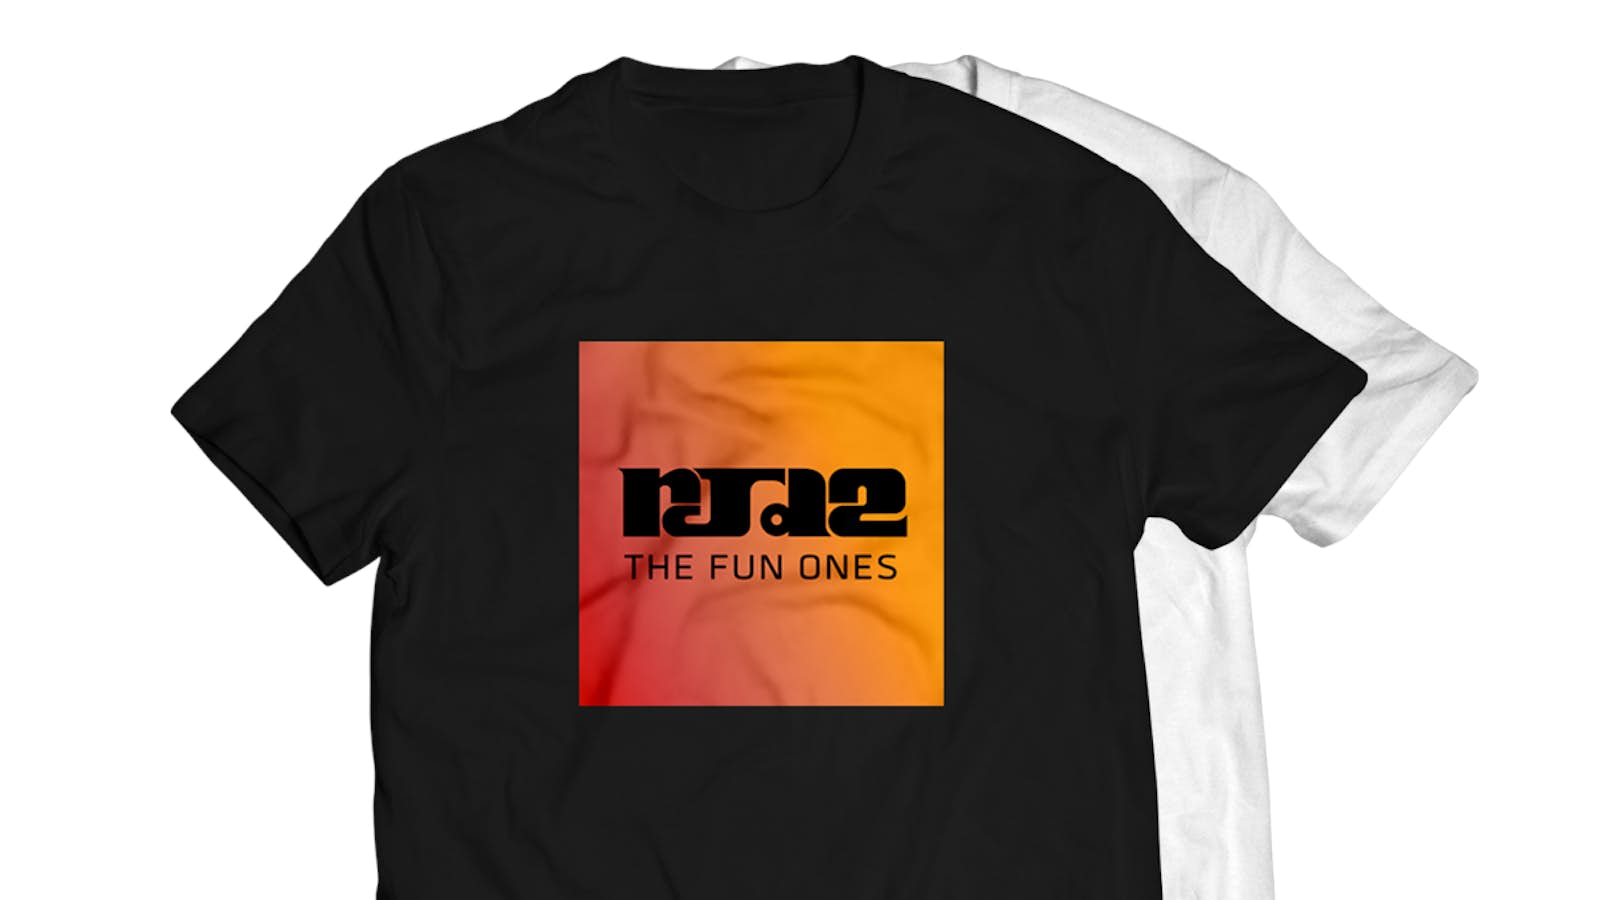 RJD2 The Fun Ones Square T-Shirt + CD + Vinyl + Download